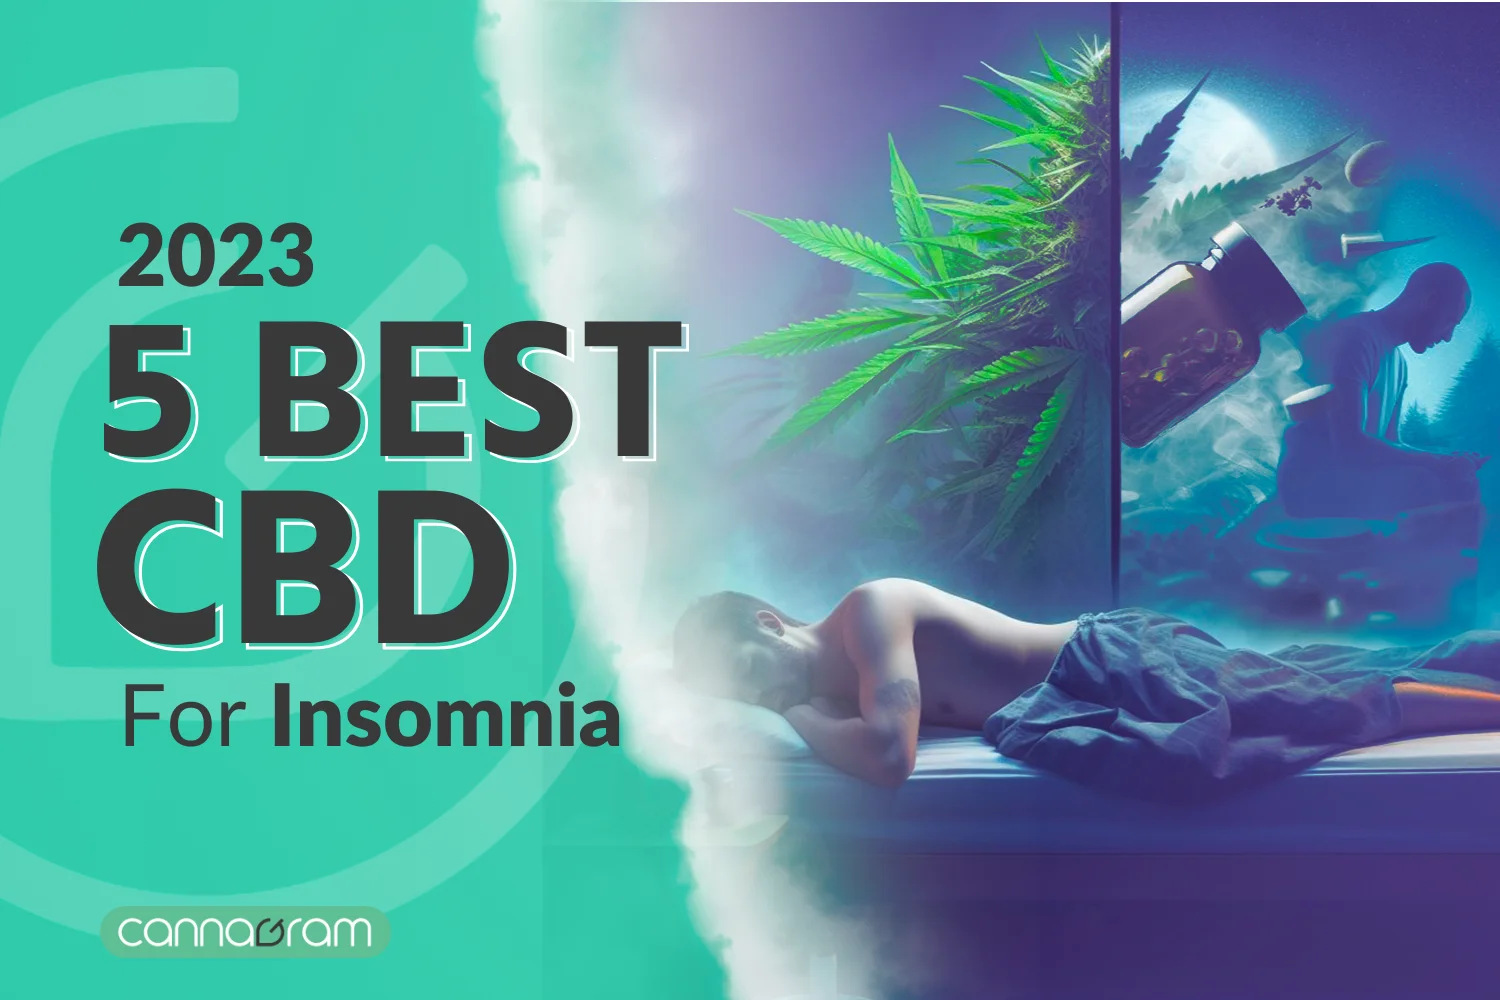 CBD for Insomnia - Sacramento's Premier CBD Store - Man Sleeping Peacefully with CBD for Insomnia